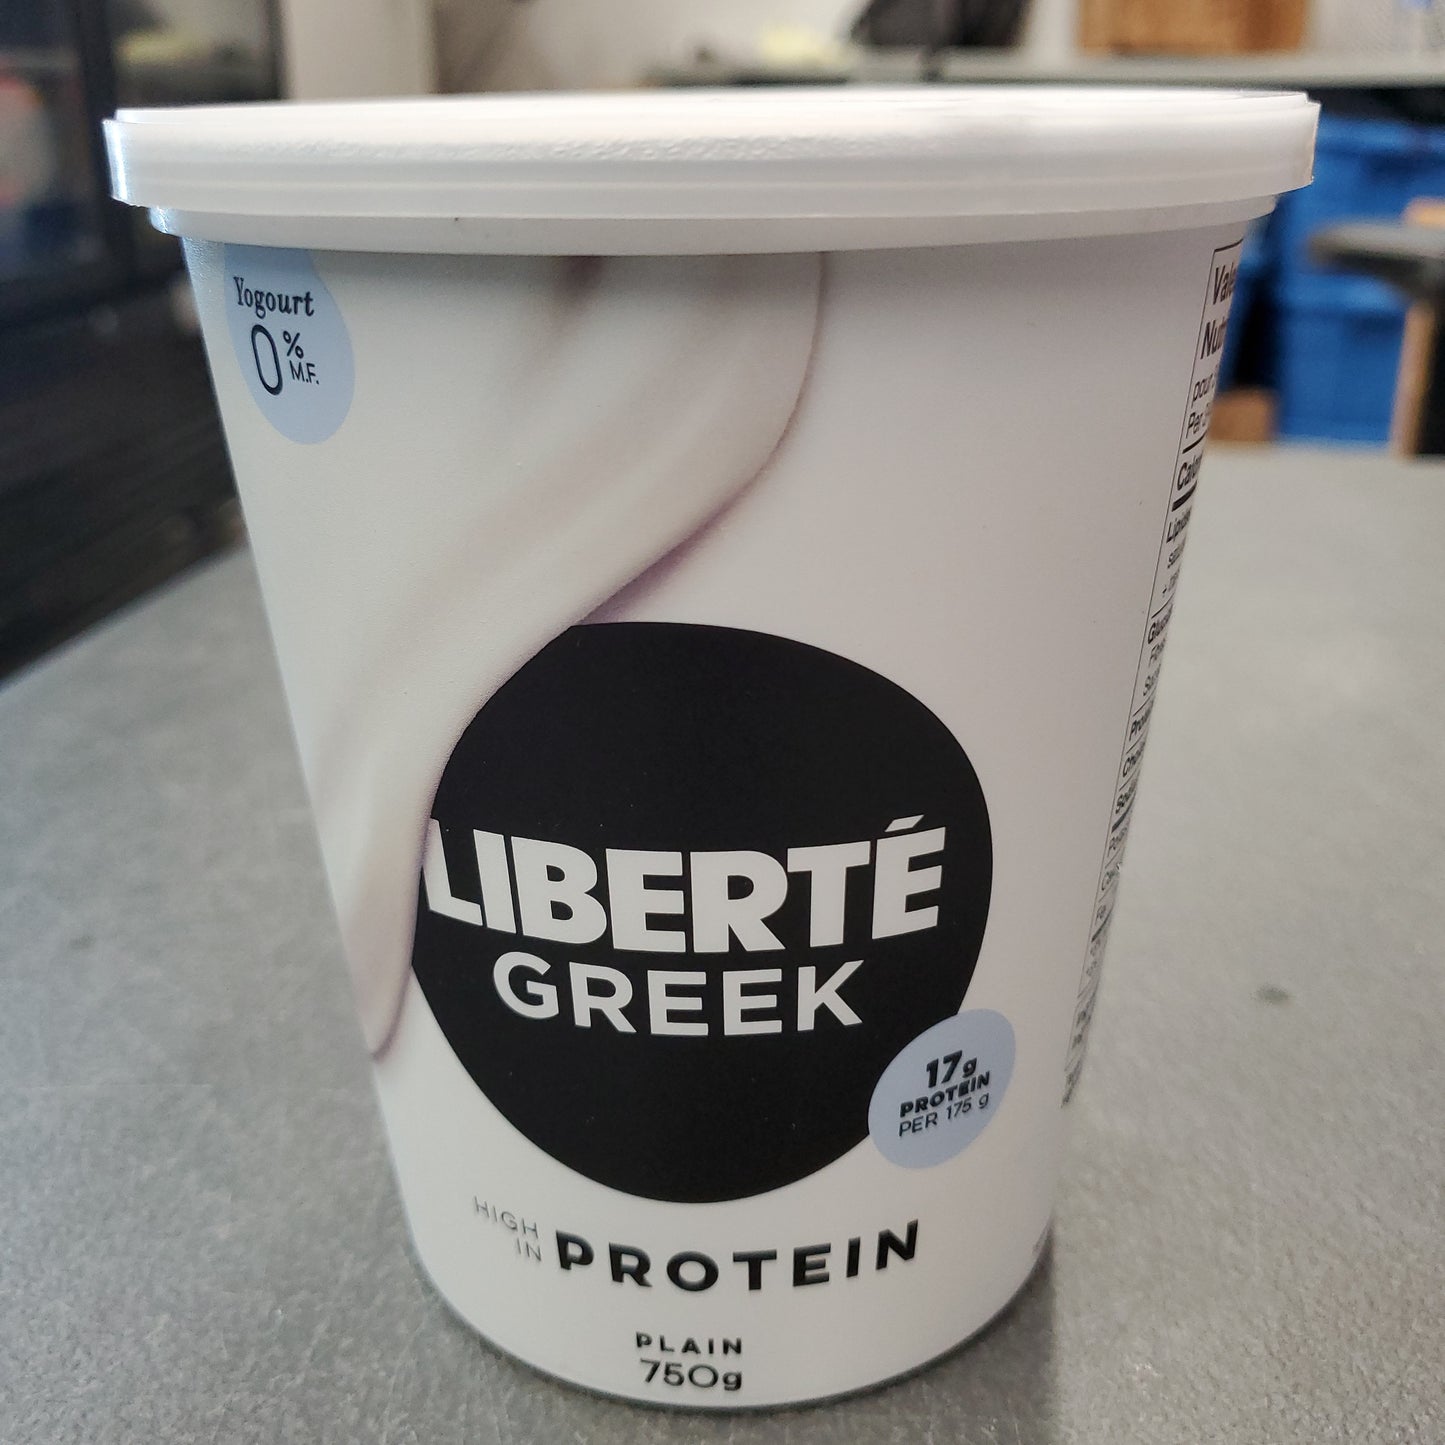 Yogurt - Variety